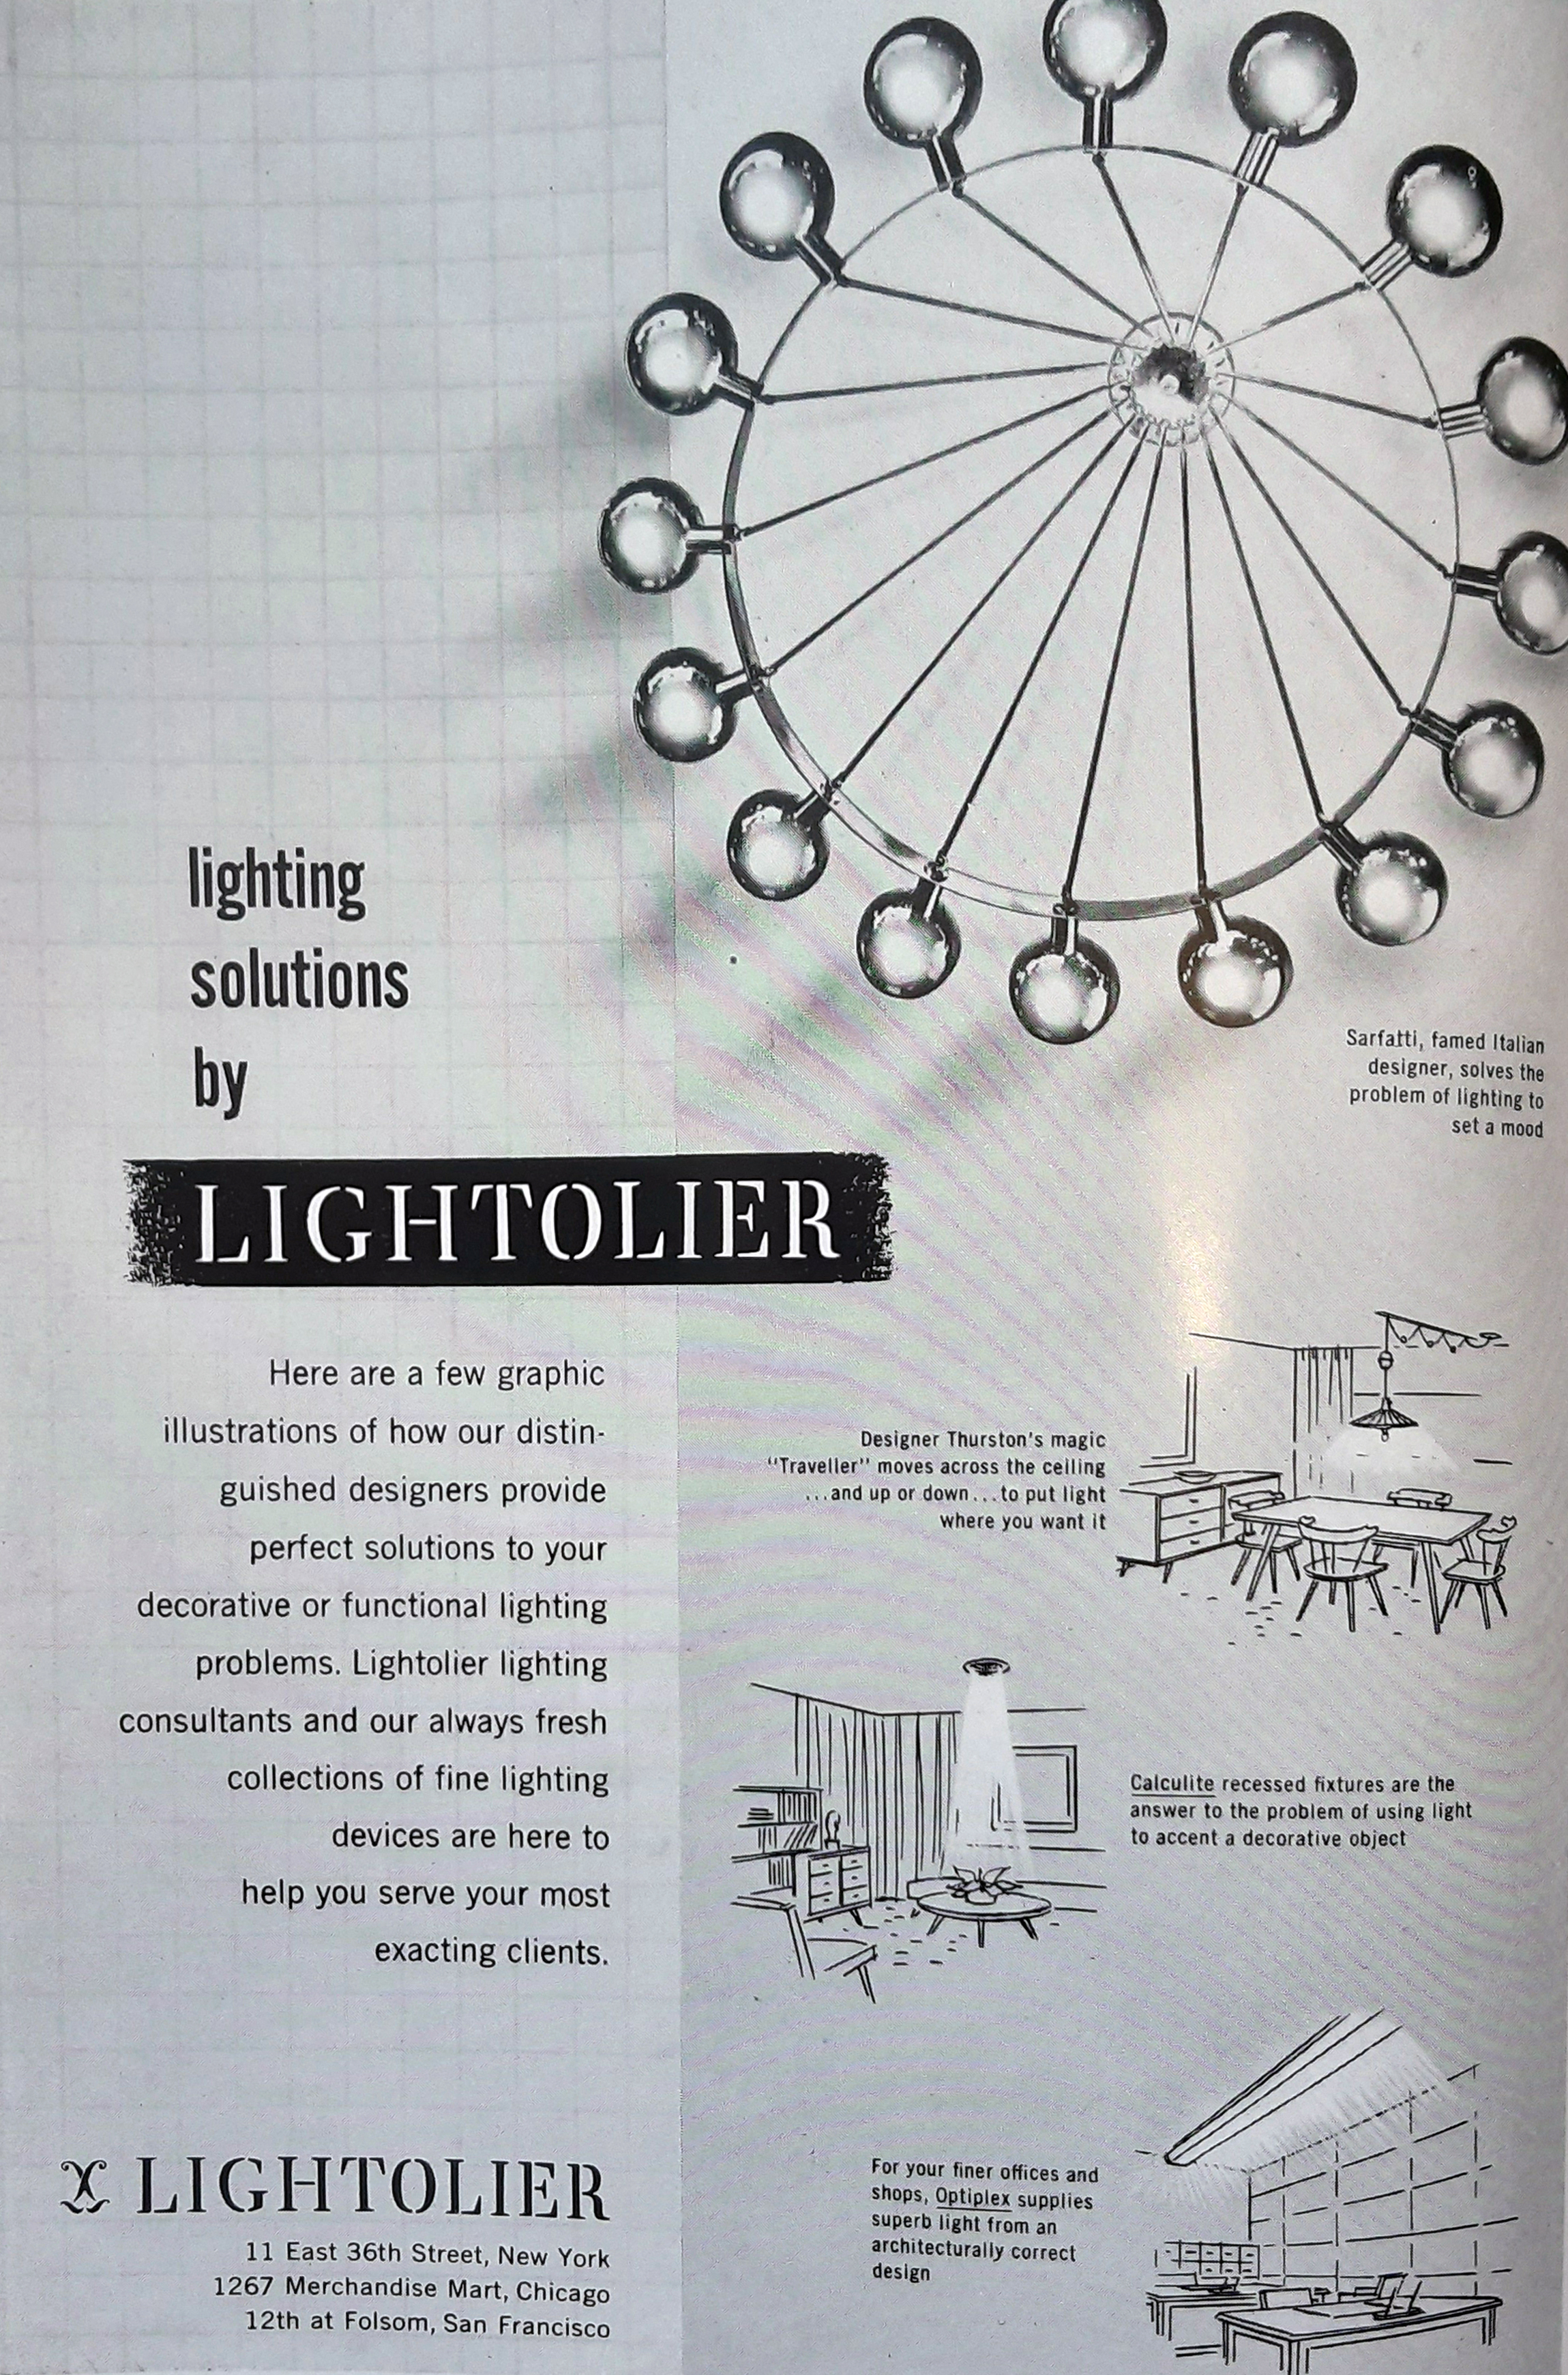 Lightolier advertising on Interiors